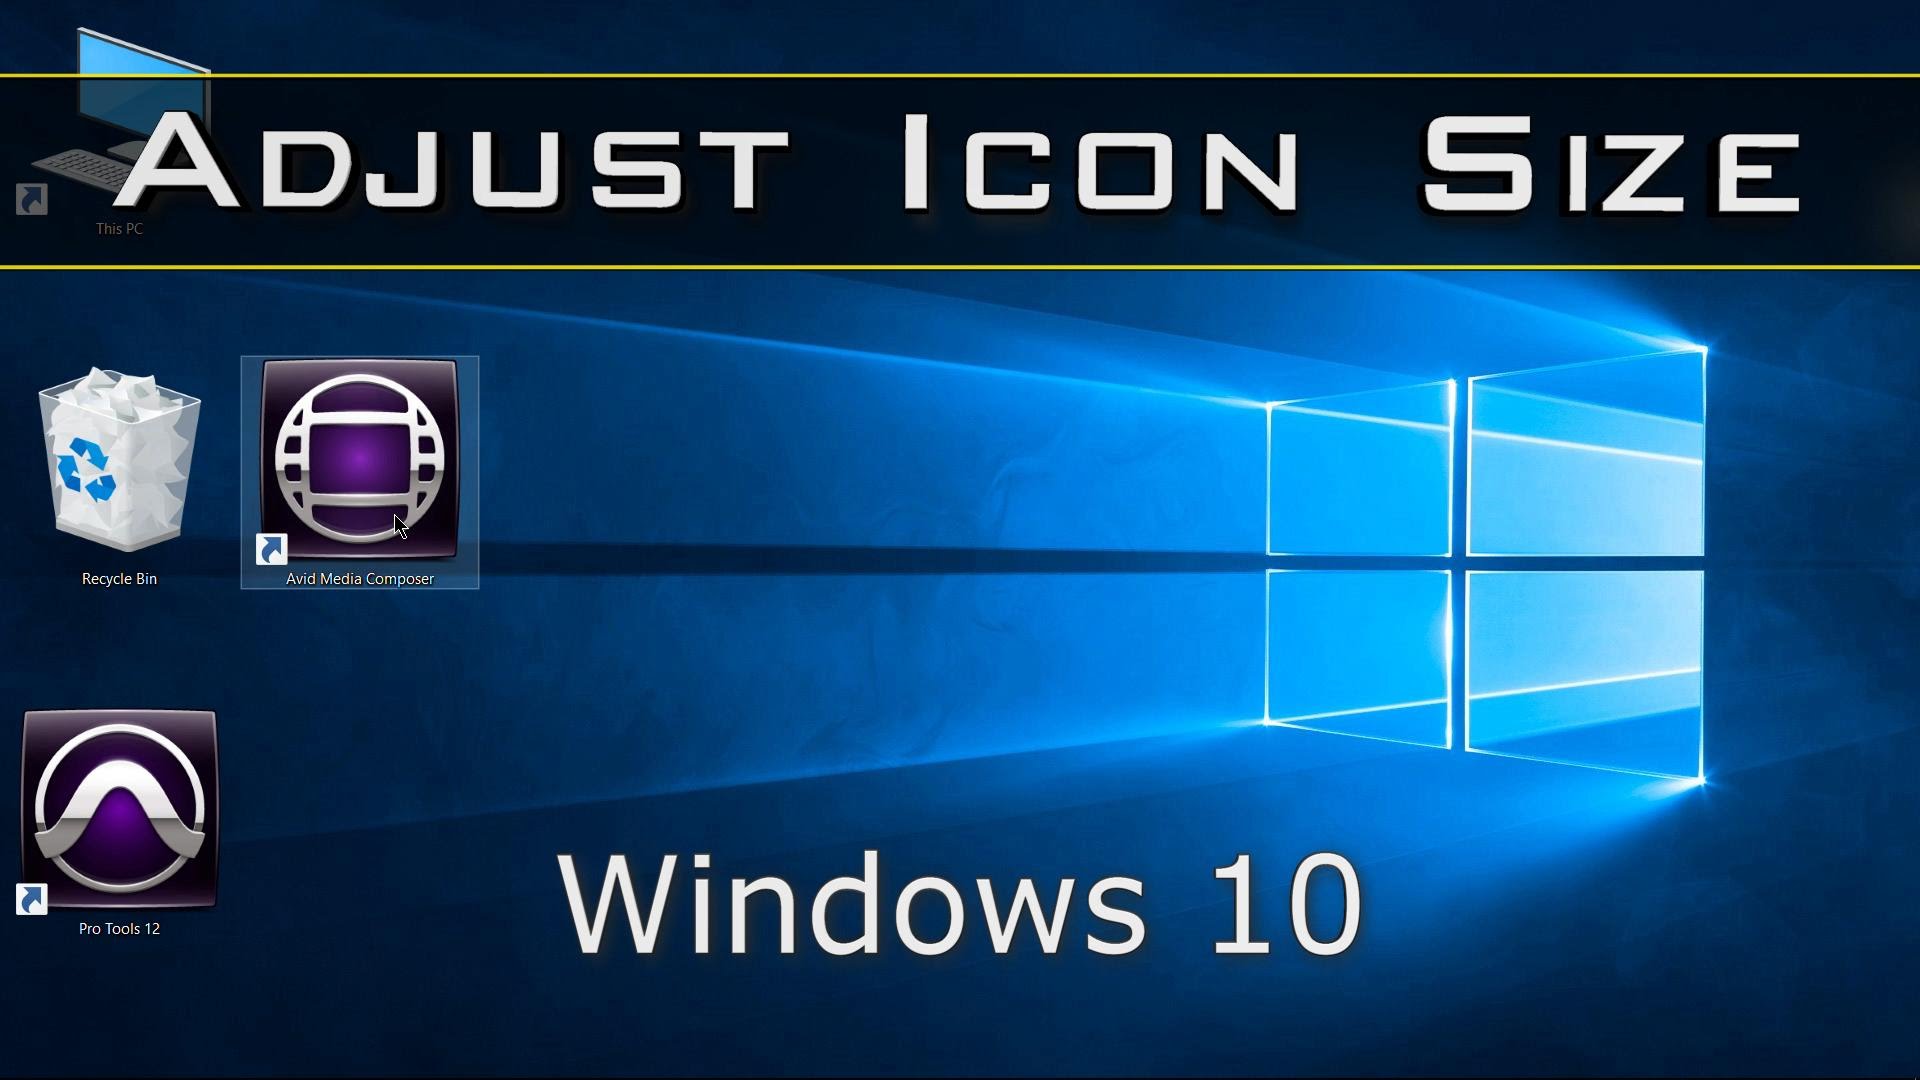 Windows 10 Icons For Windows 7/8.1